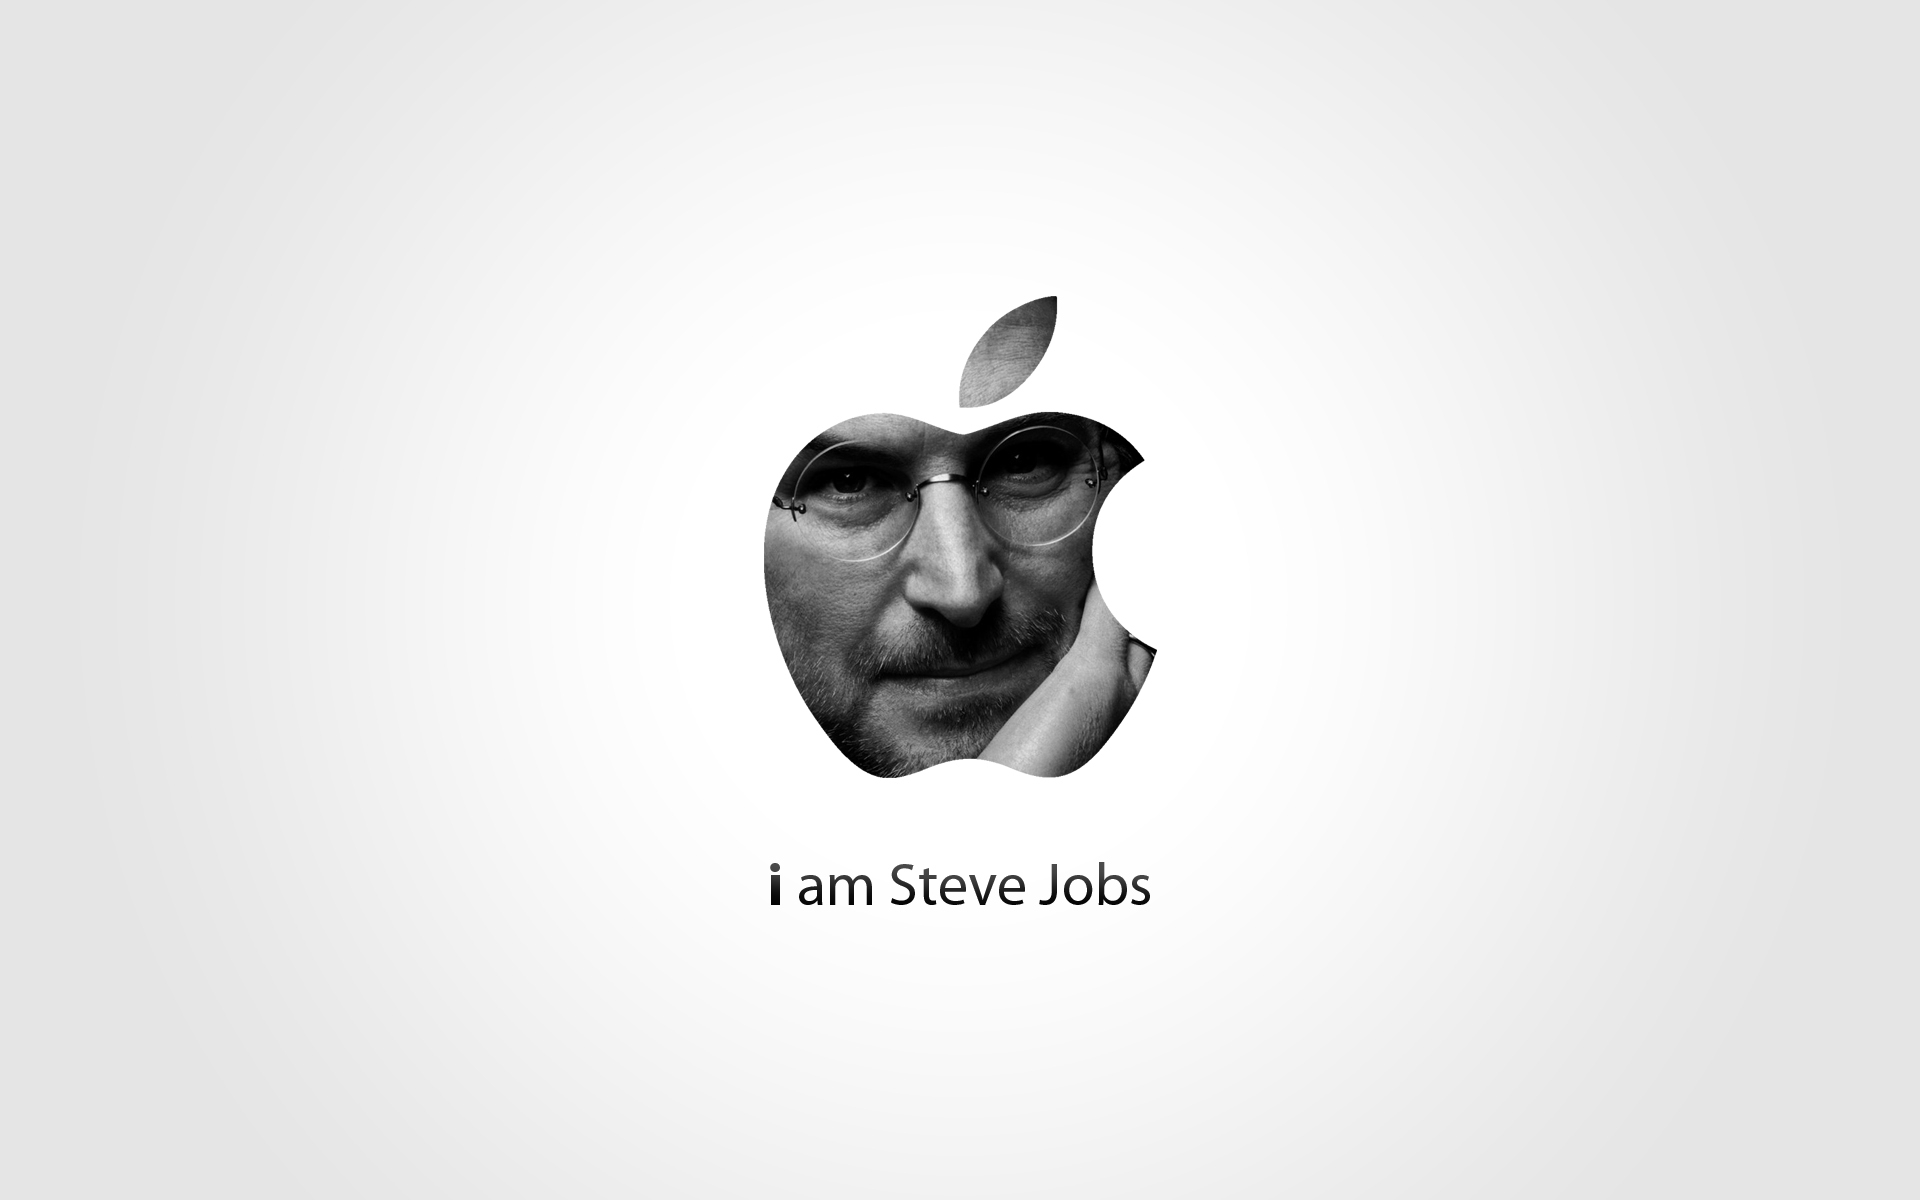 Tribute To Steve Jobs Wallpaper In HD 1dut Jpg